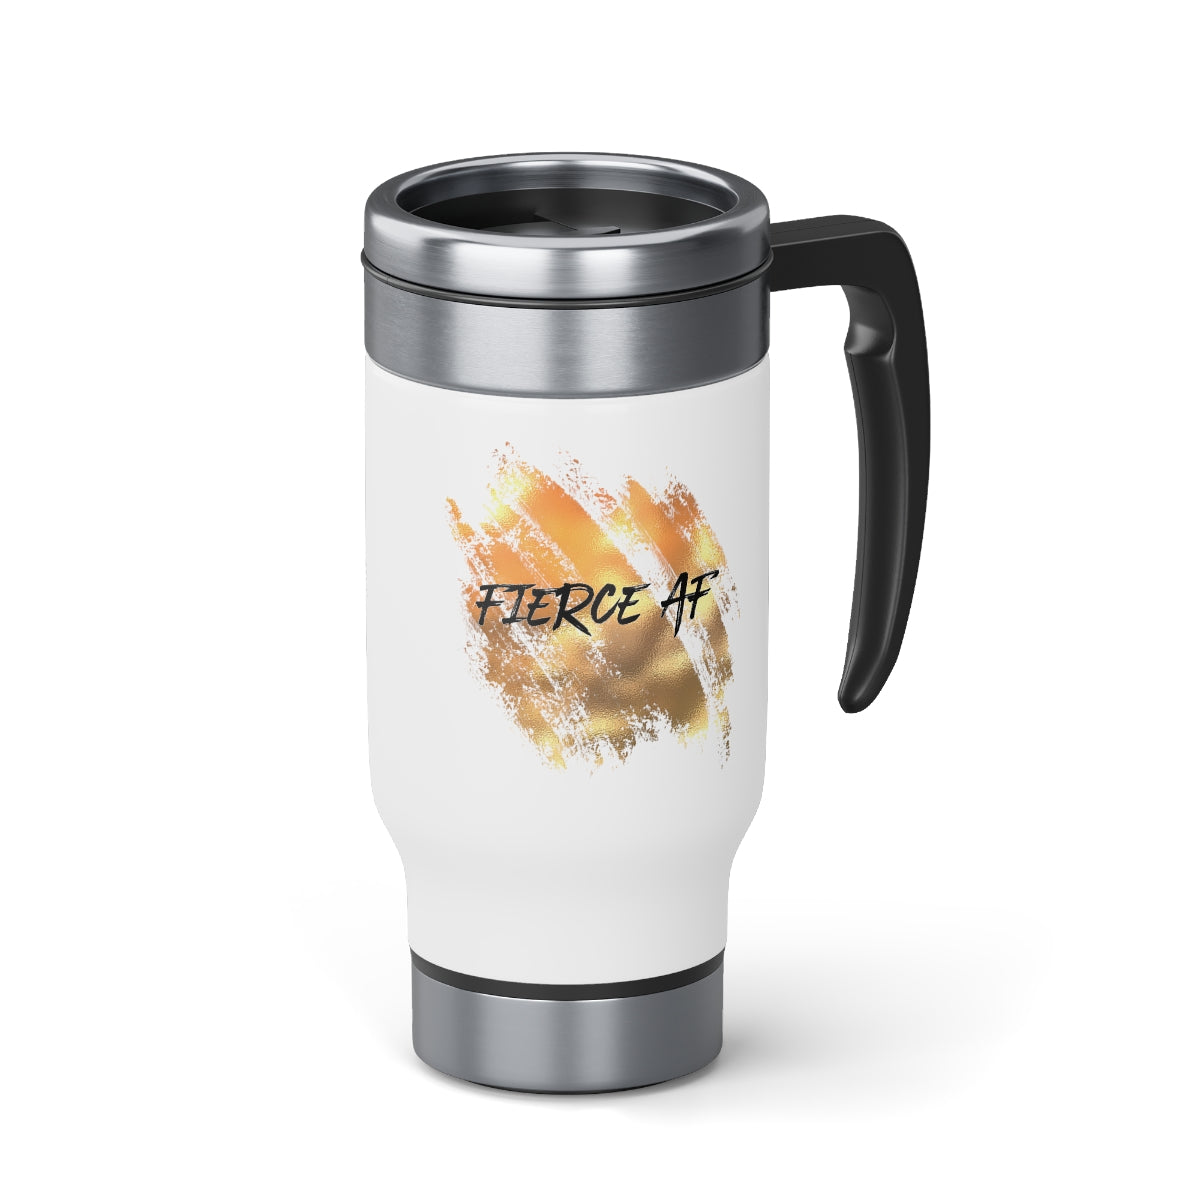 "Fierce AF" Stainless Steel Travel Mug with Handle, 14oz